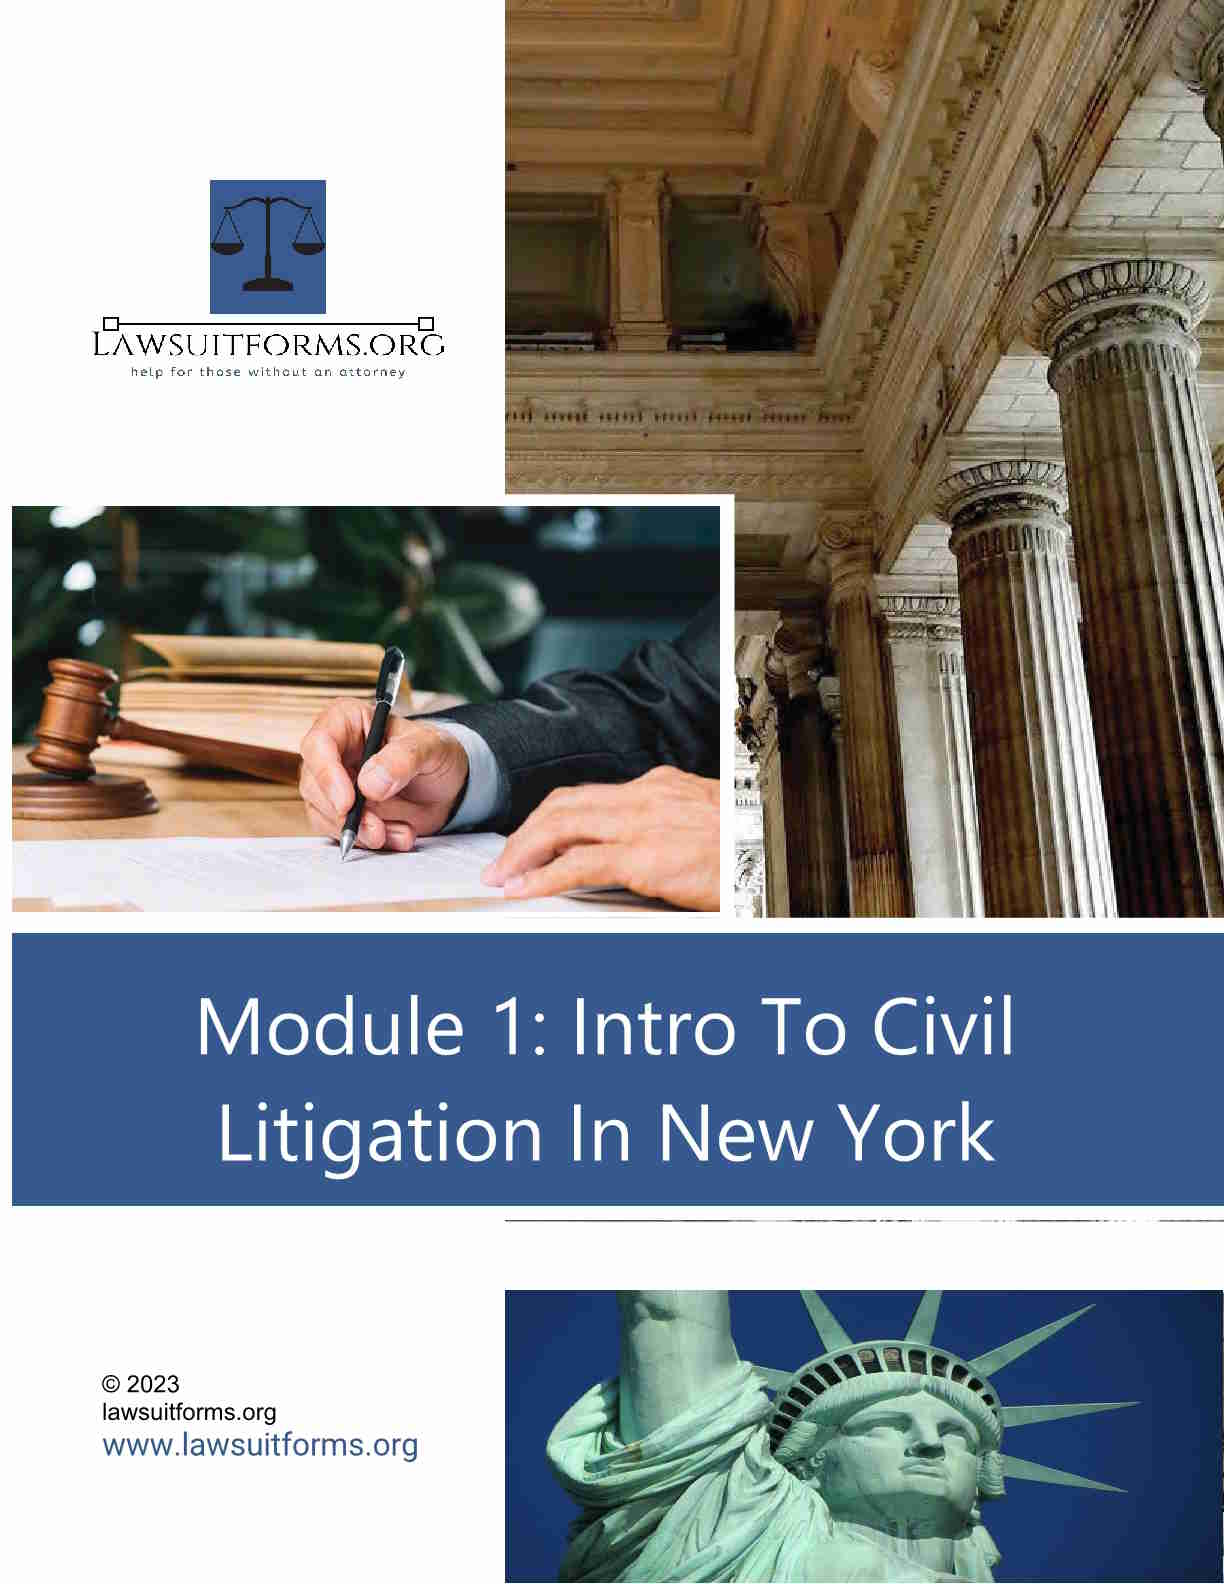 Intro to civil litigation in New York